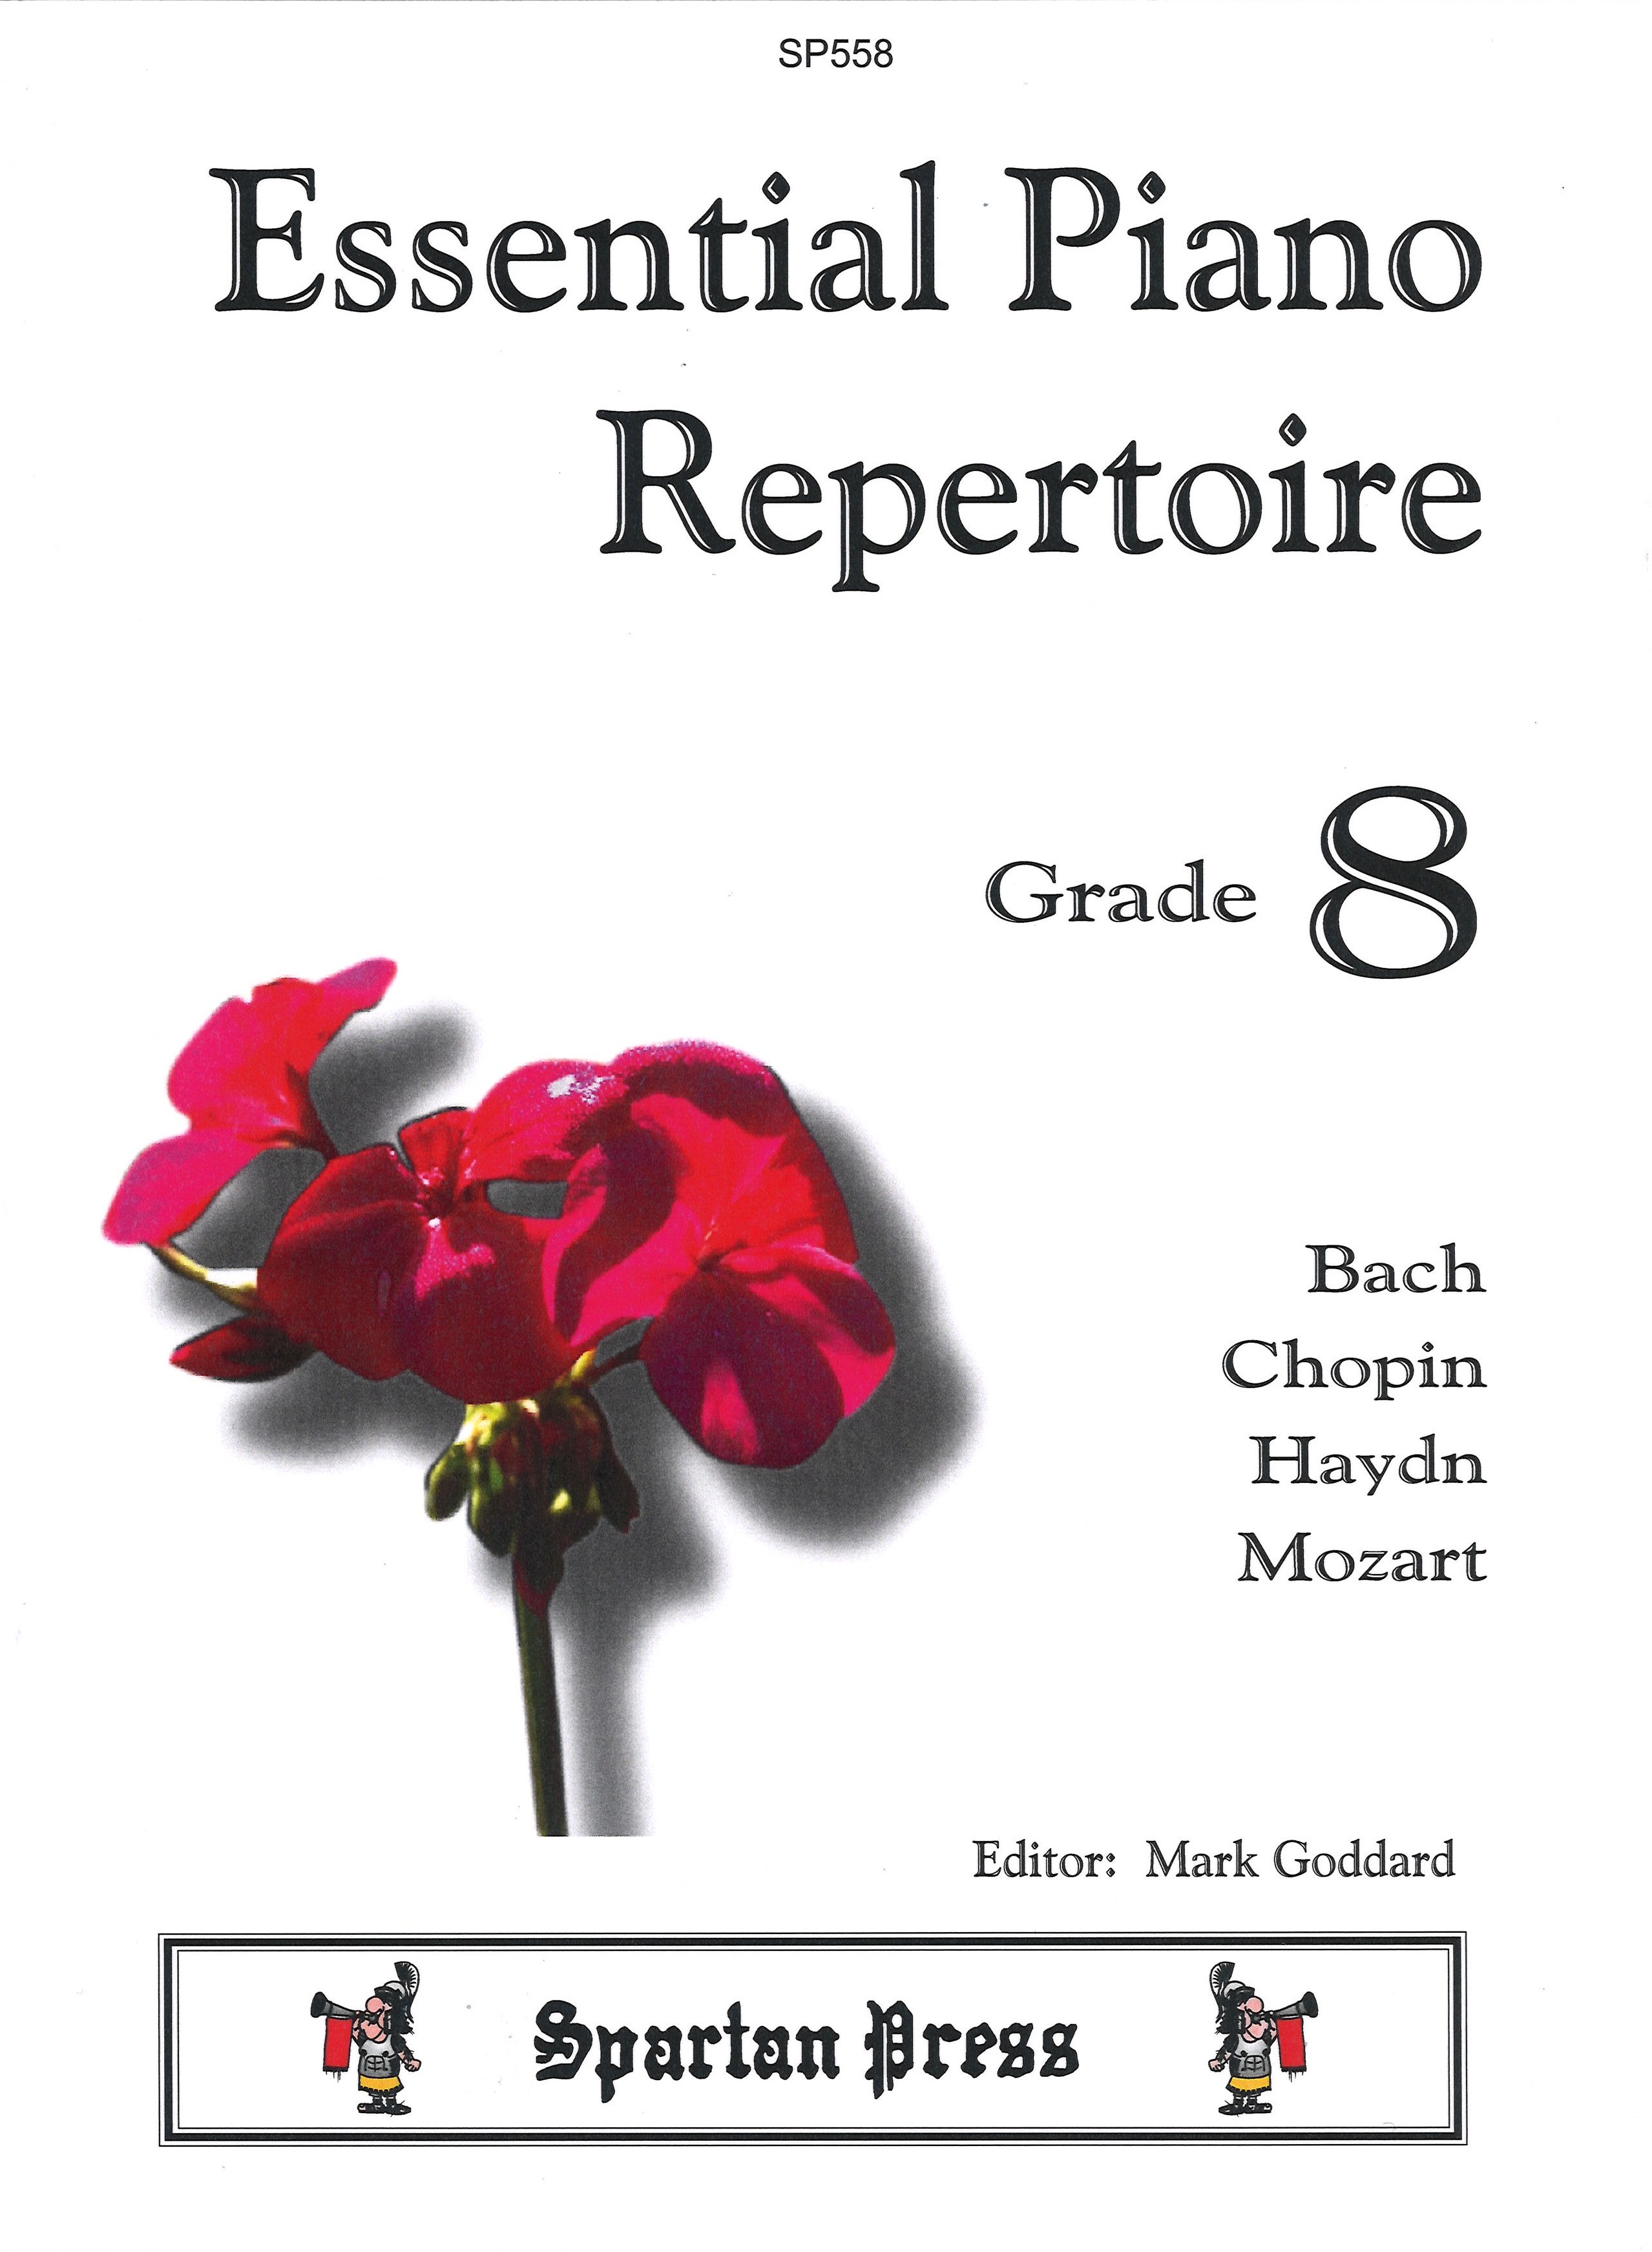 Essential Piano Repertoire Grade 8 Sheet Music Songbook